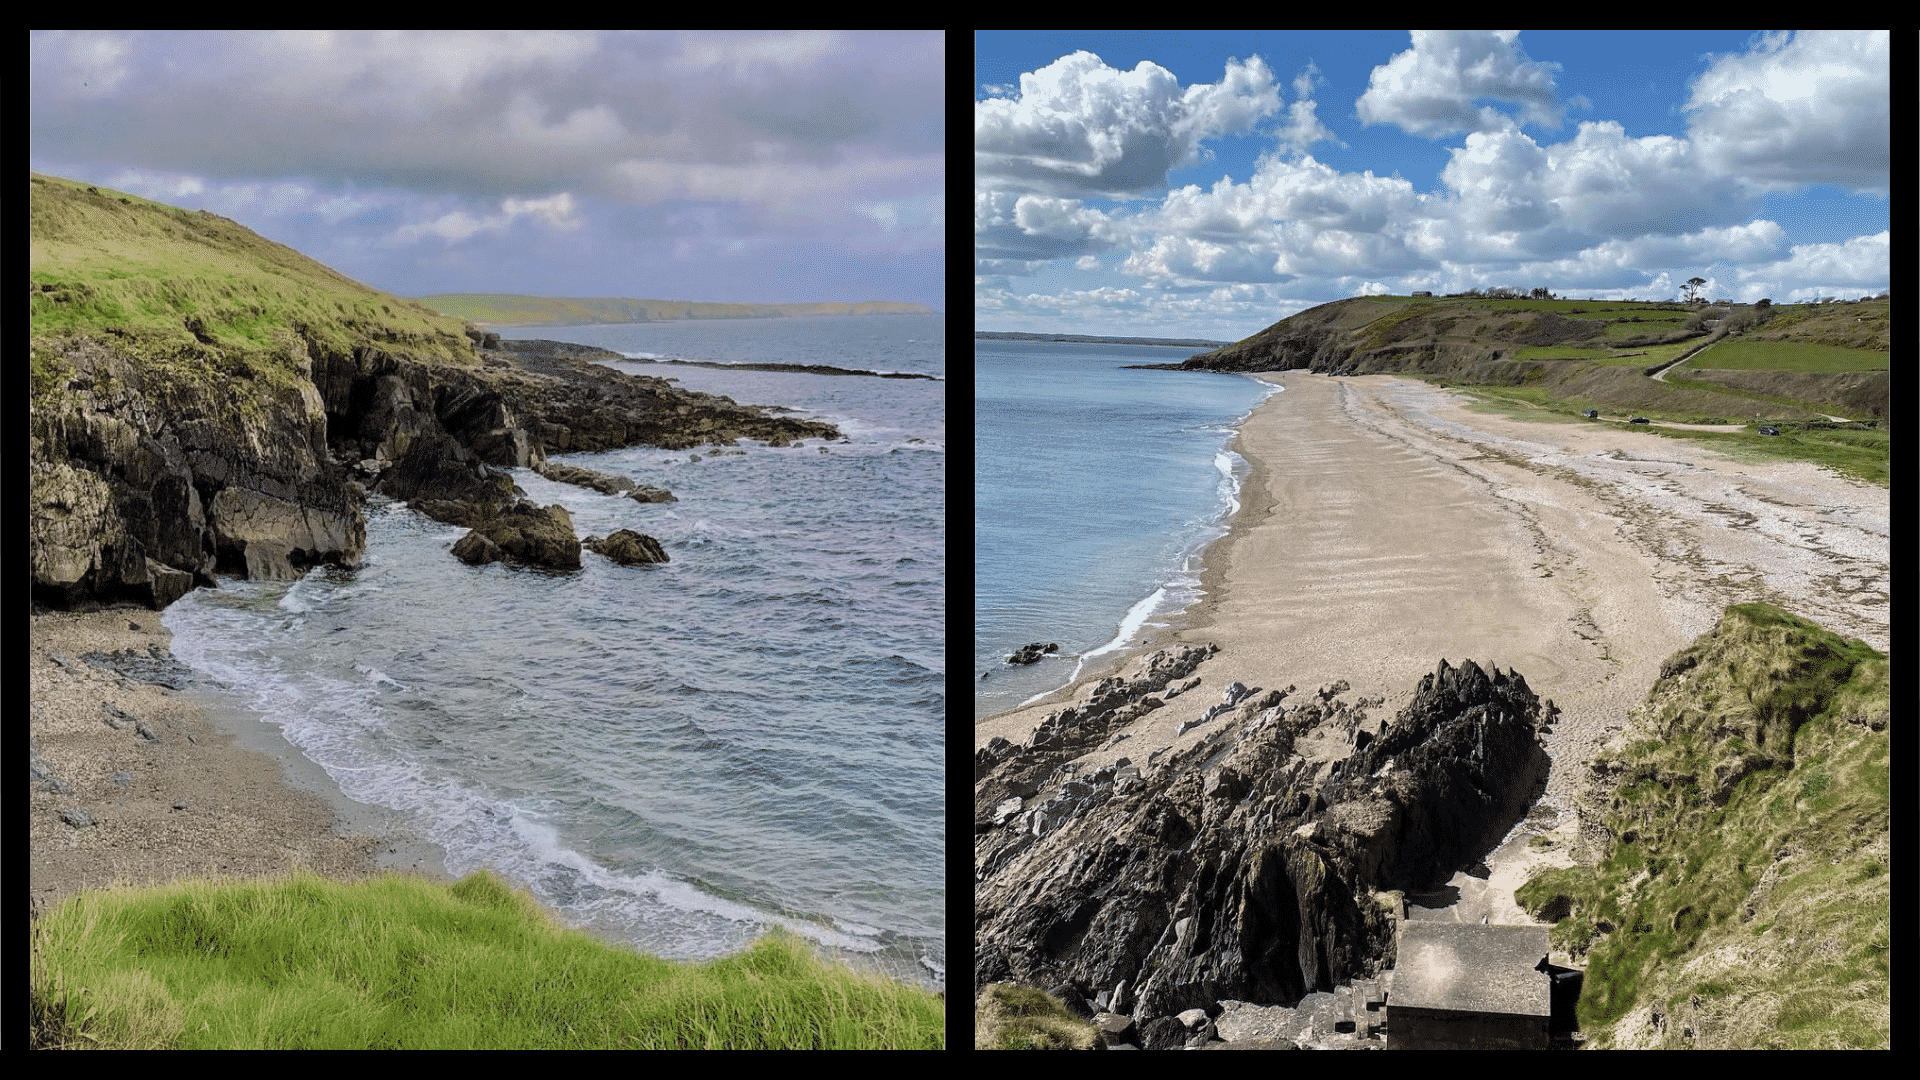 Top 5 best-known NUDIST beaches in Ireland, RANKED